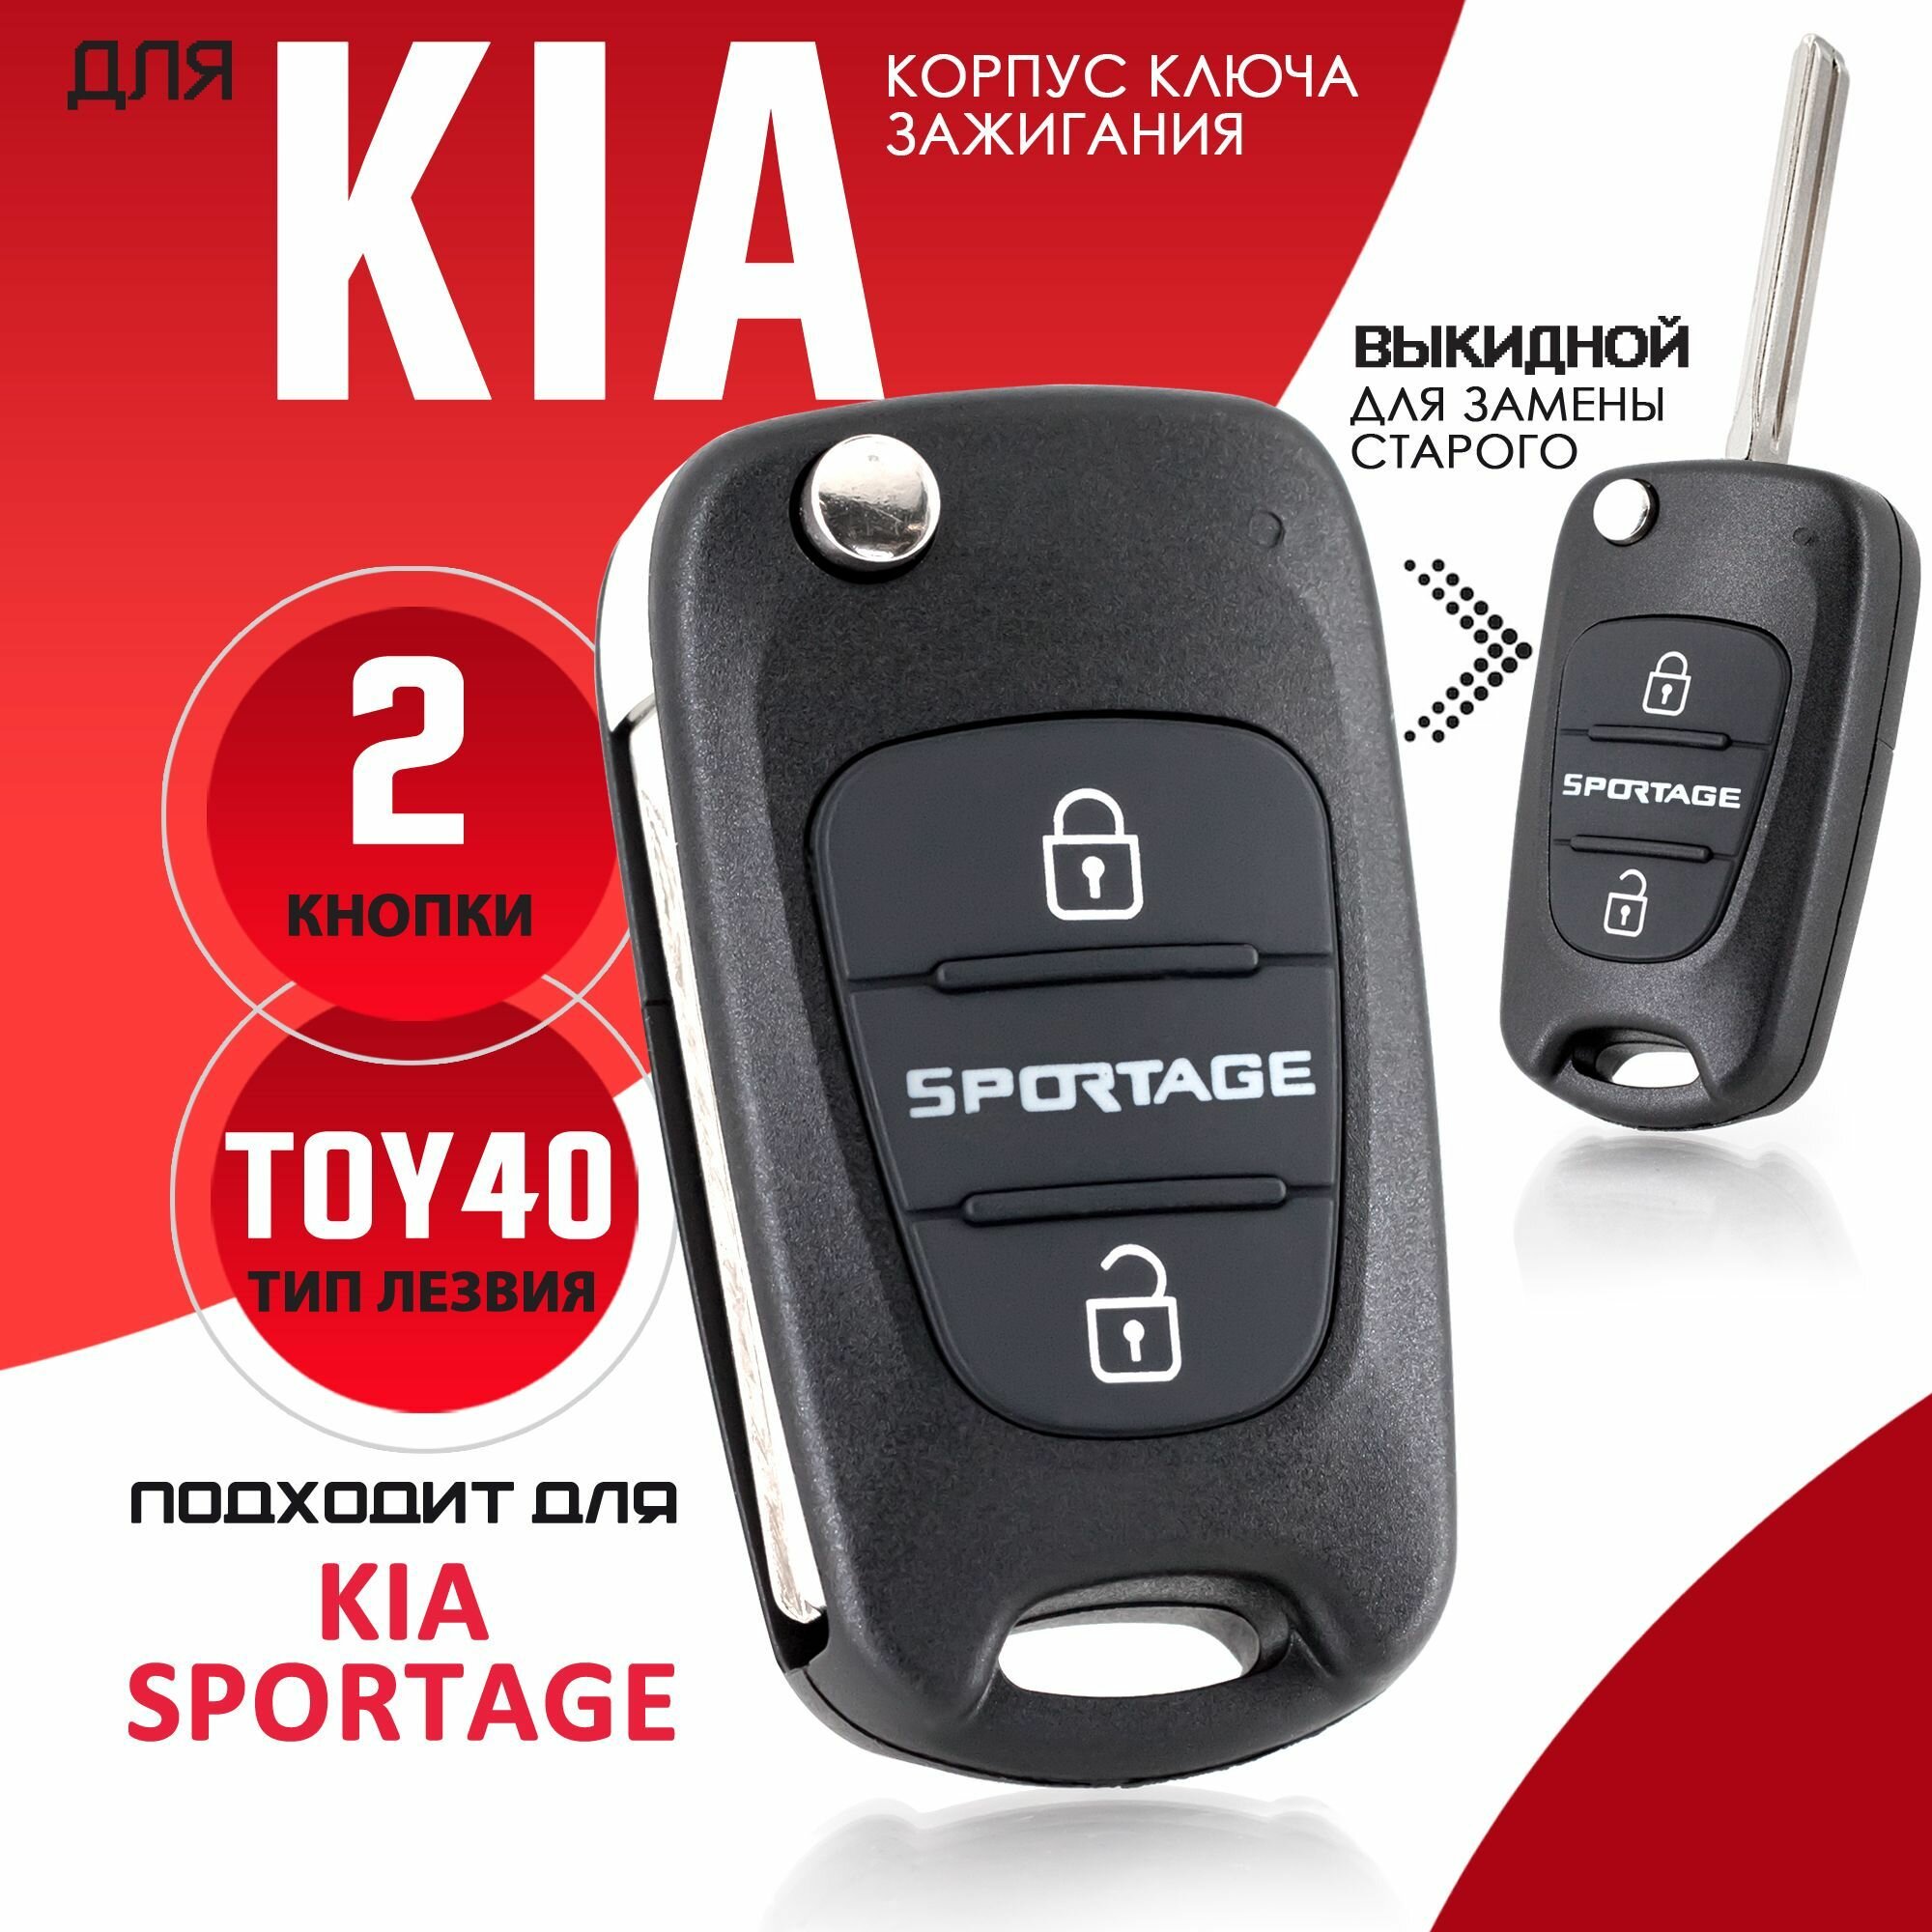 Корпус ключа зажигания для Kia Sportage Киа Спортейдж - 1 штука (2х кнопочный ключ) лезвие TOY40